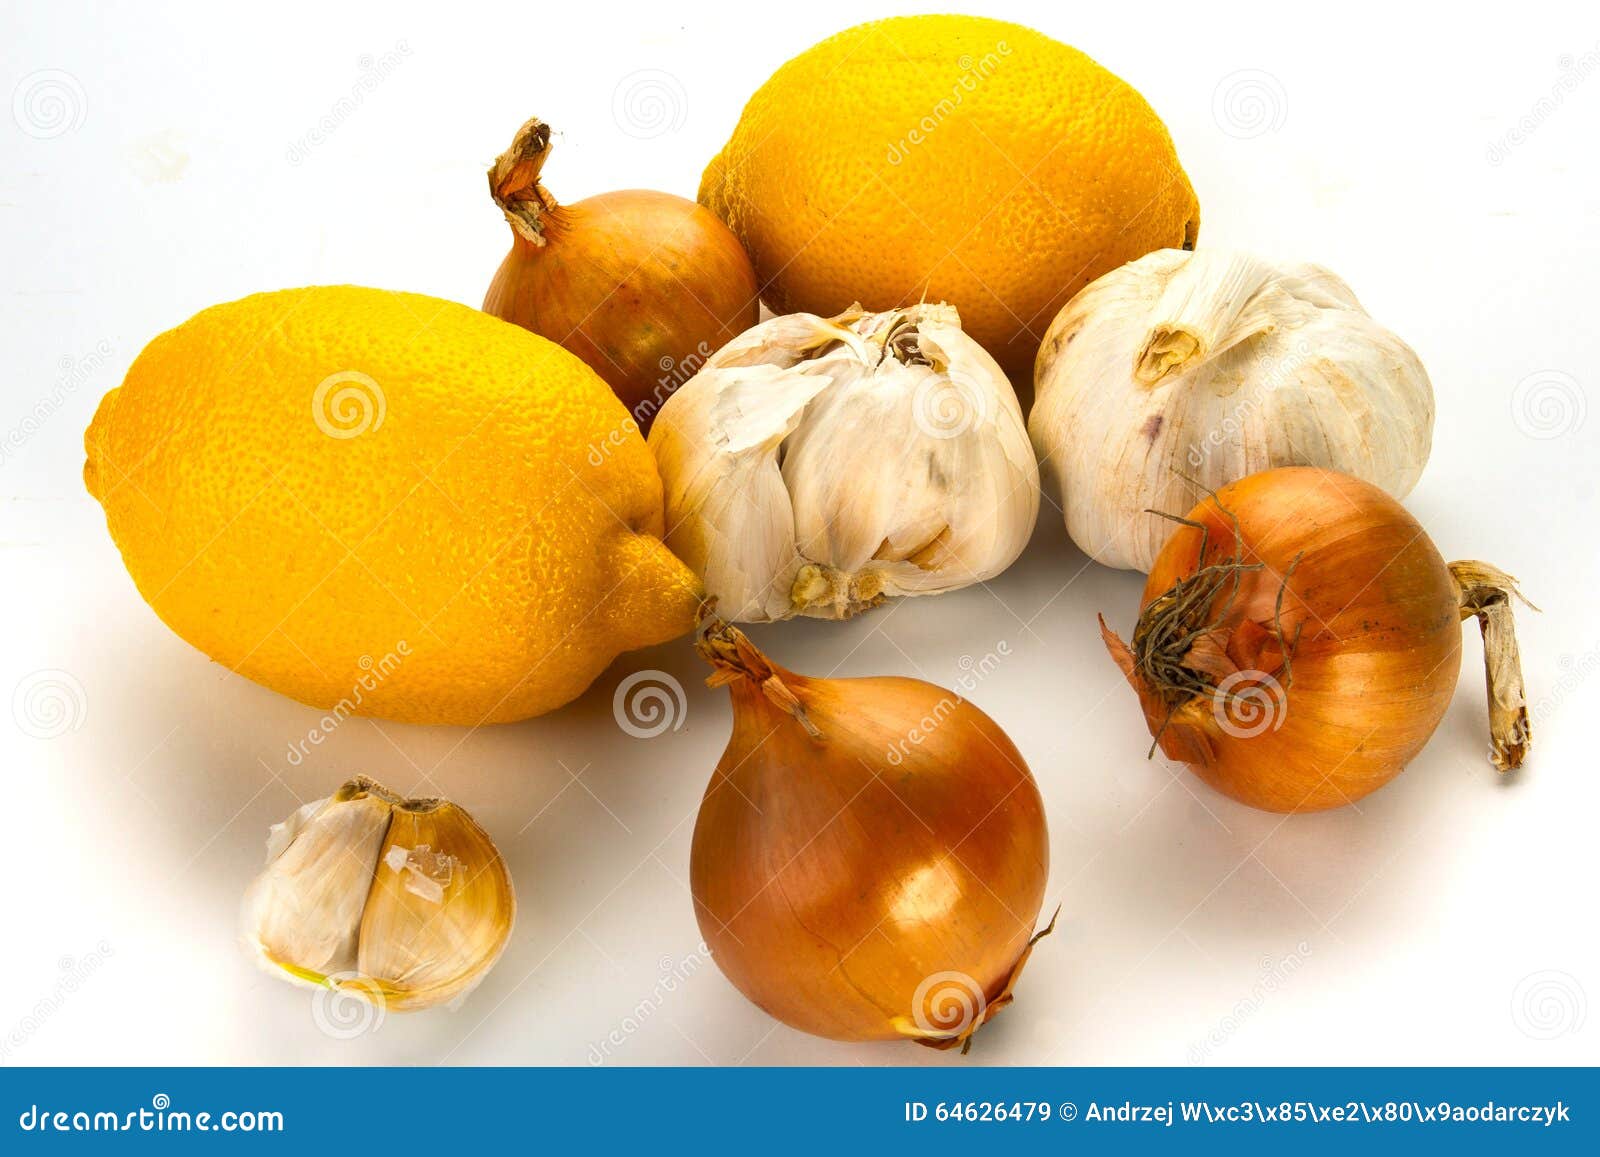 Лук чеснок лимон. Лимончик лук. Лимон и луковица. Лук, имбирь, чеснок, Цитрусы.